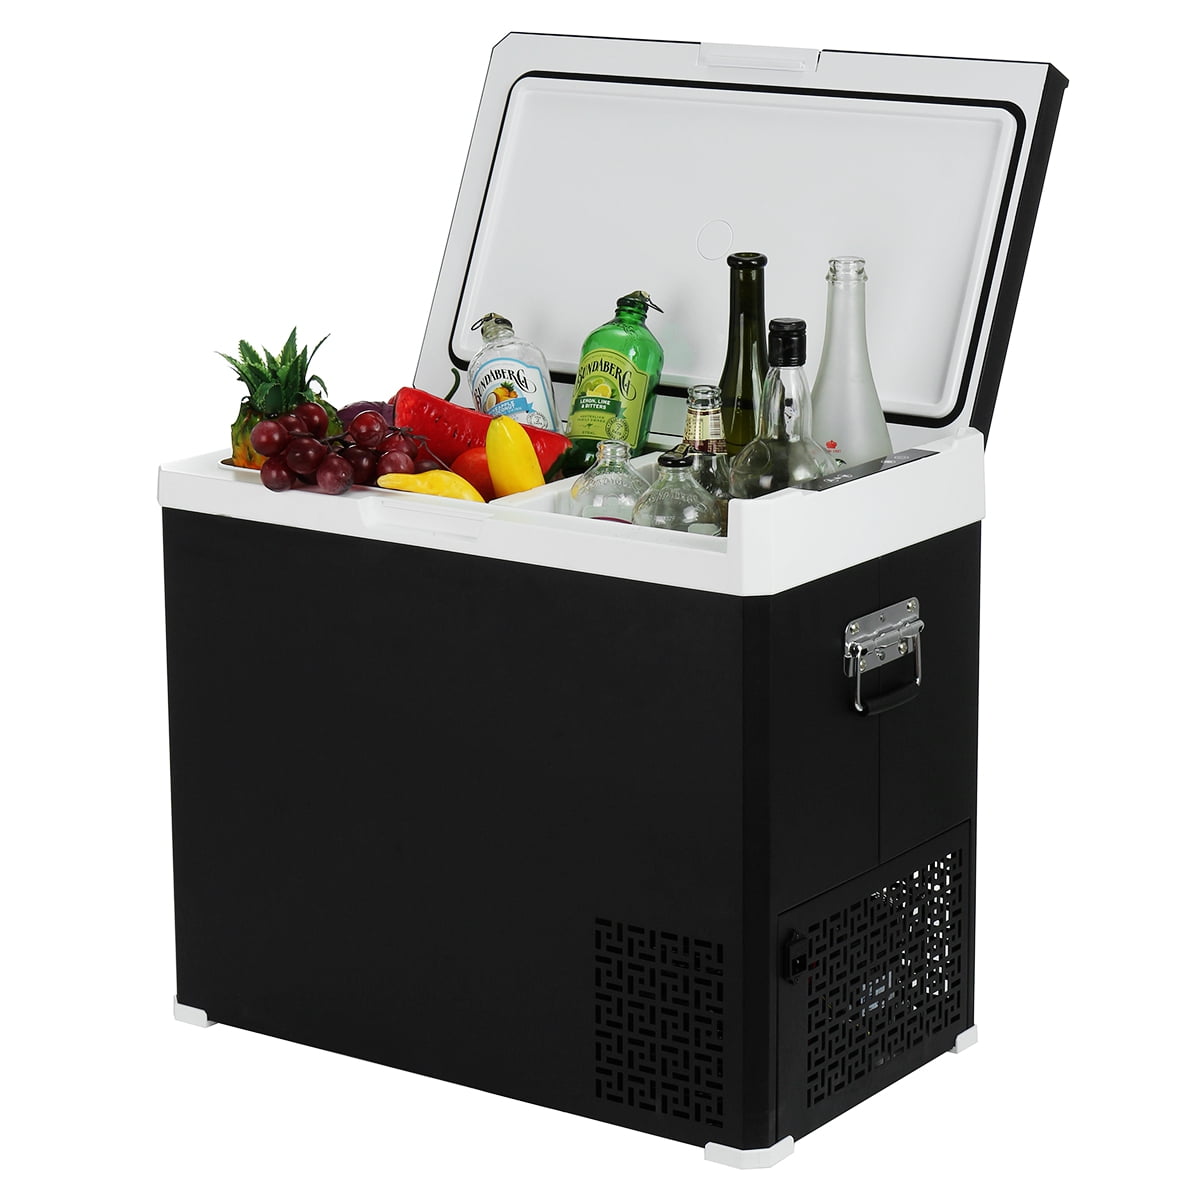 Hcalory 40L Portable Car Refrigerator, 42 Quart RV Fridge